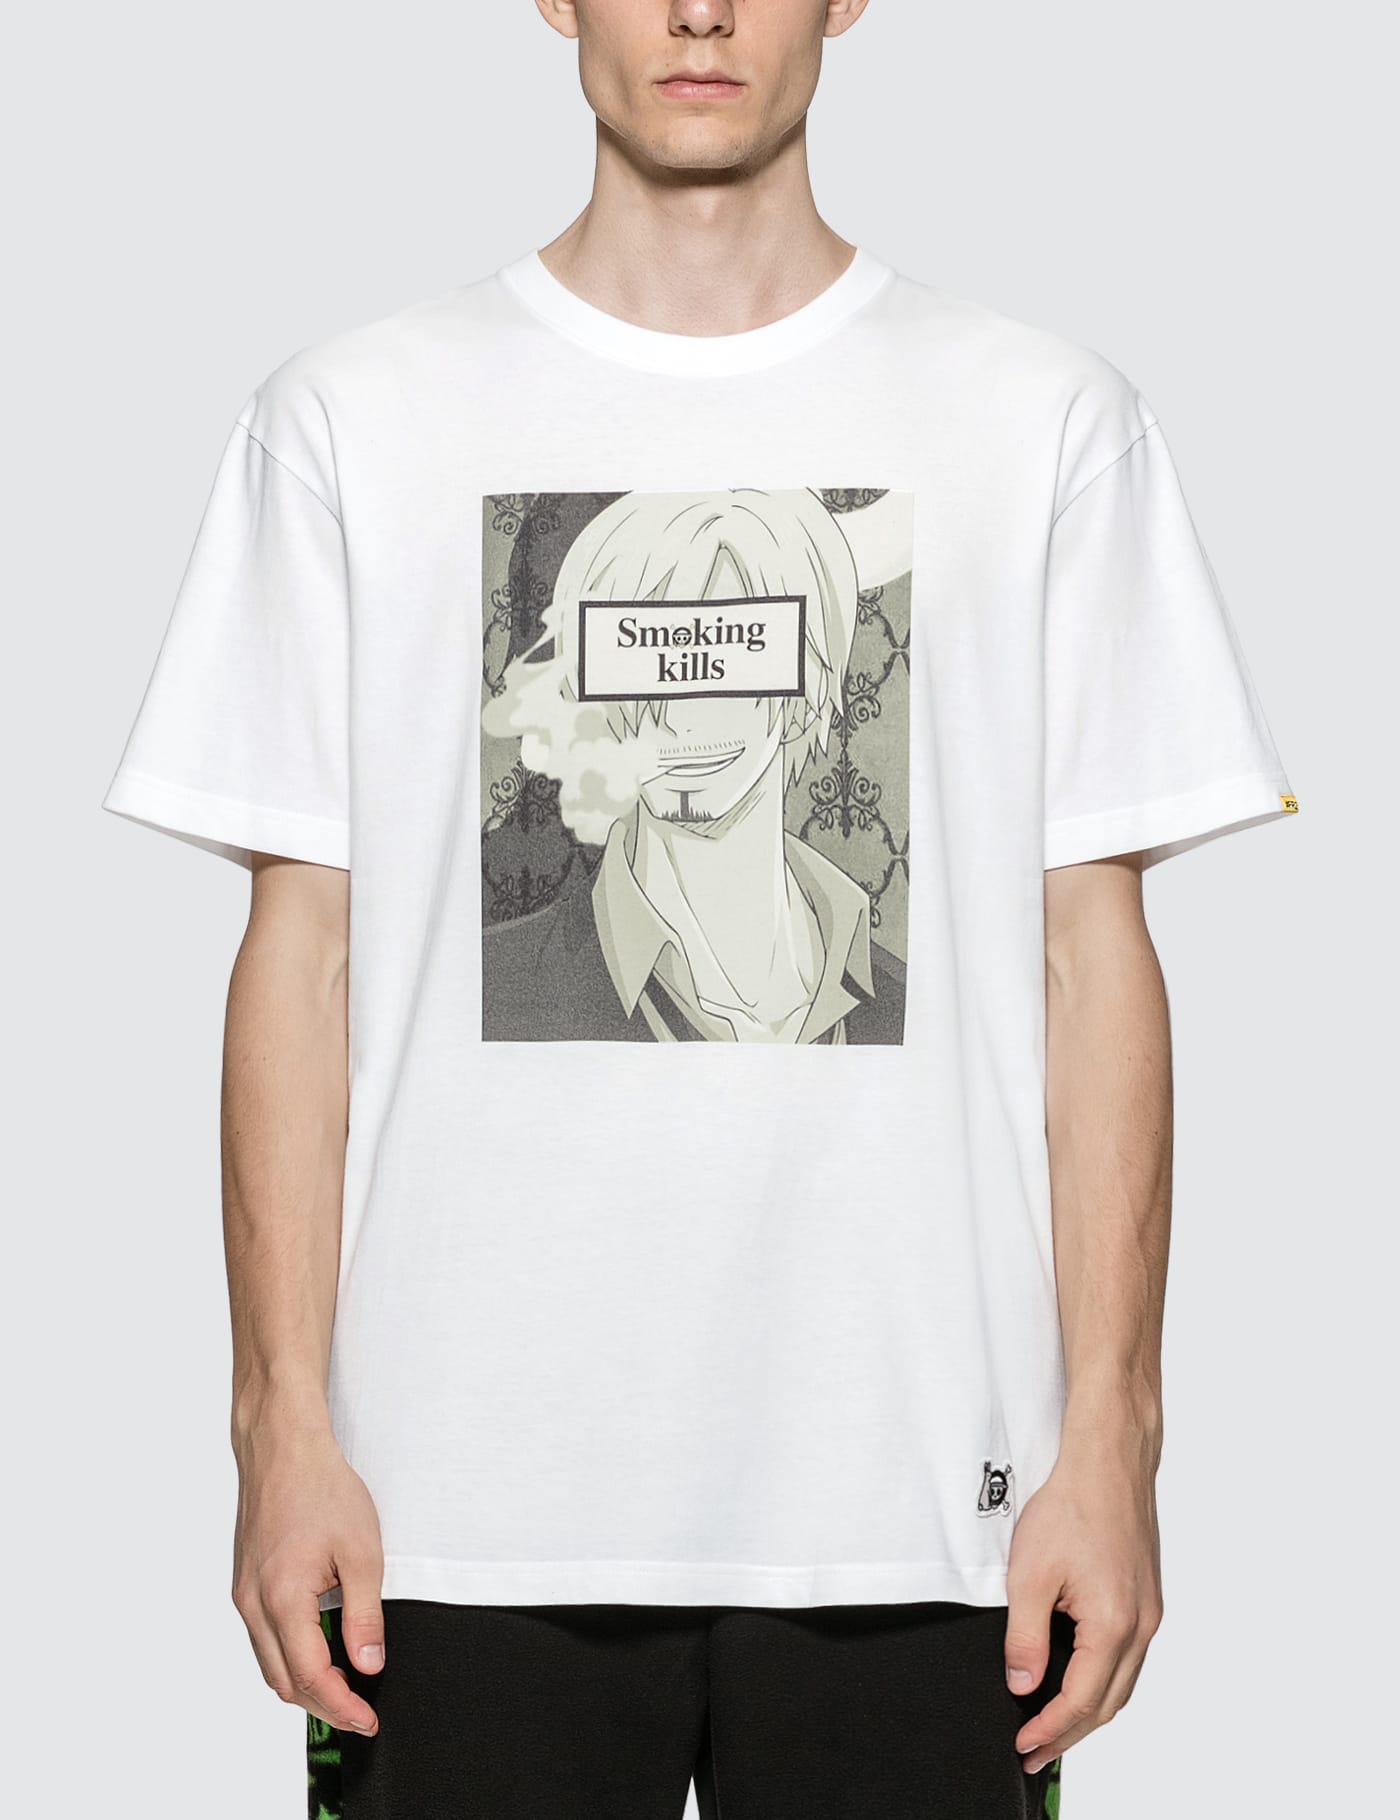 FR2 - #FR2 X One Piece Sanji Smokers T-shirt | HBX - ハイプ 